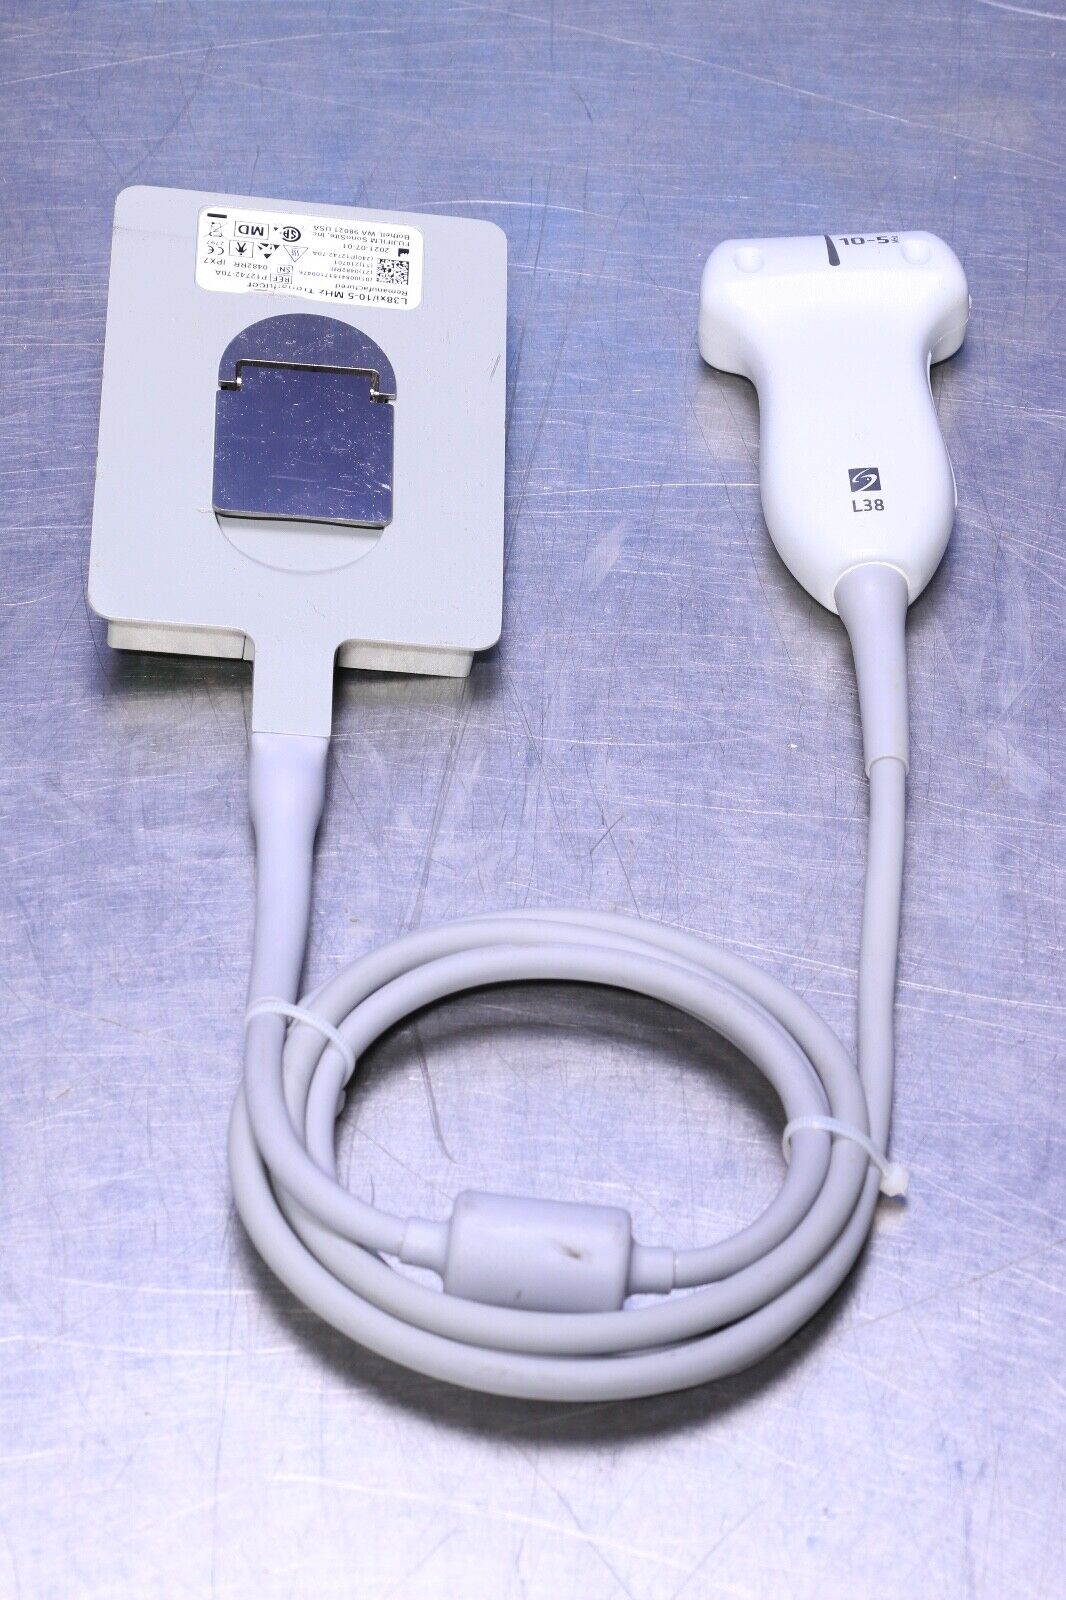 Sonosite L38xi/10-5MHz Ultrasound Transducer